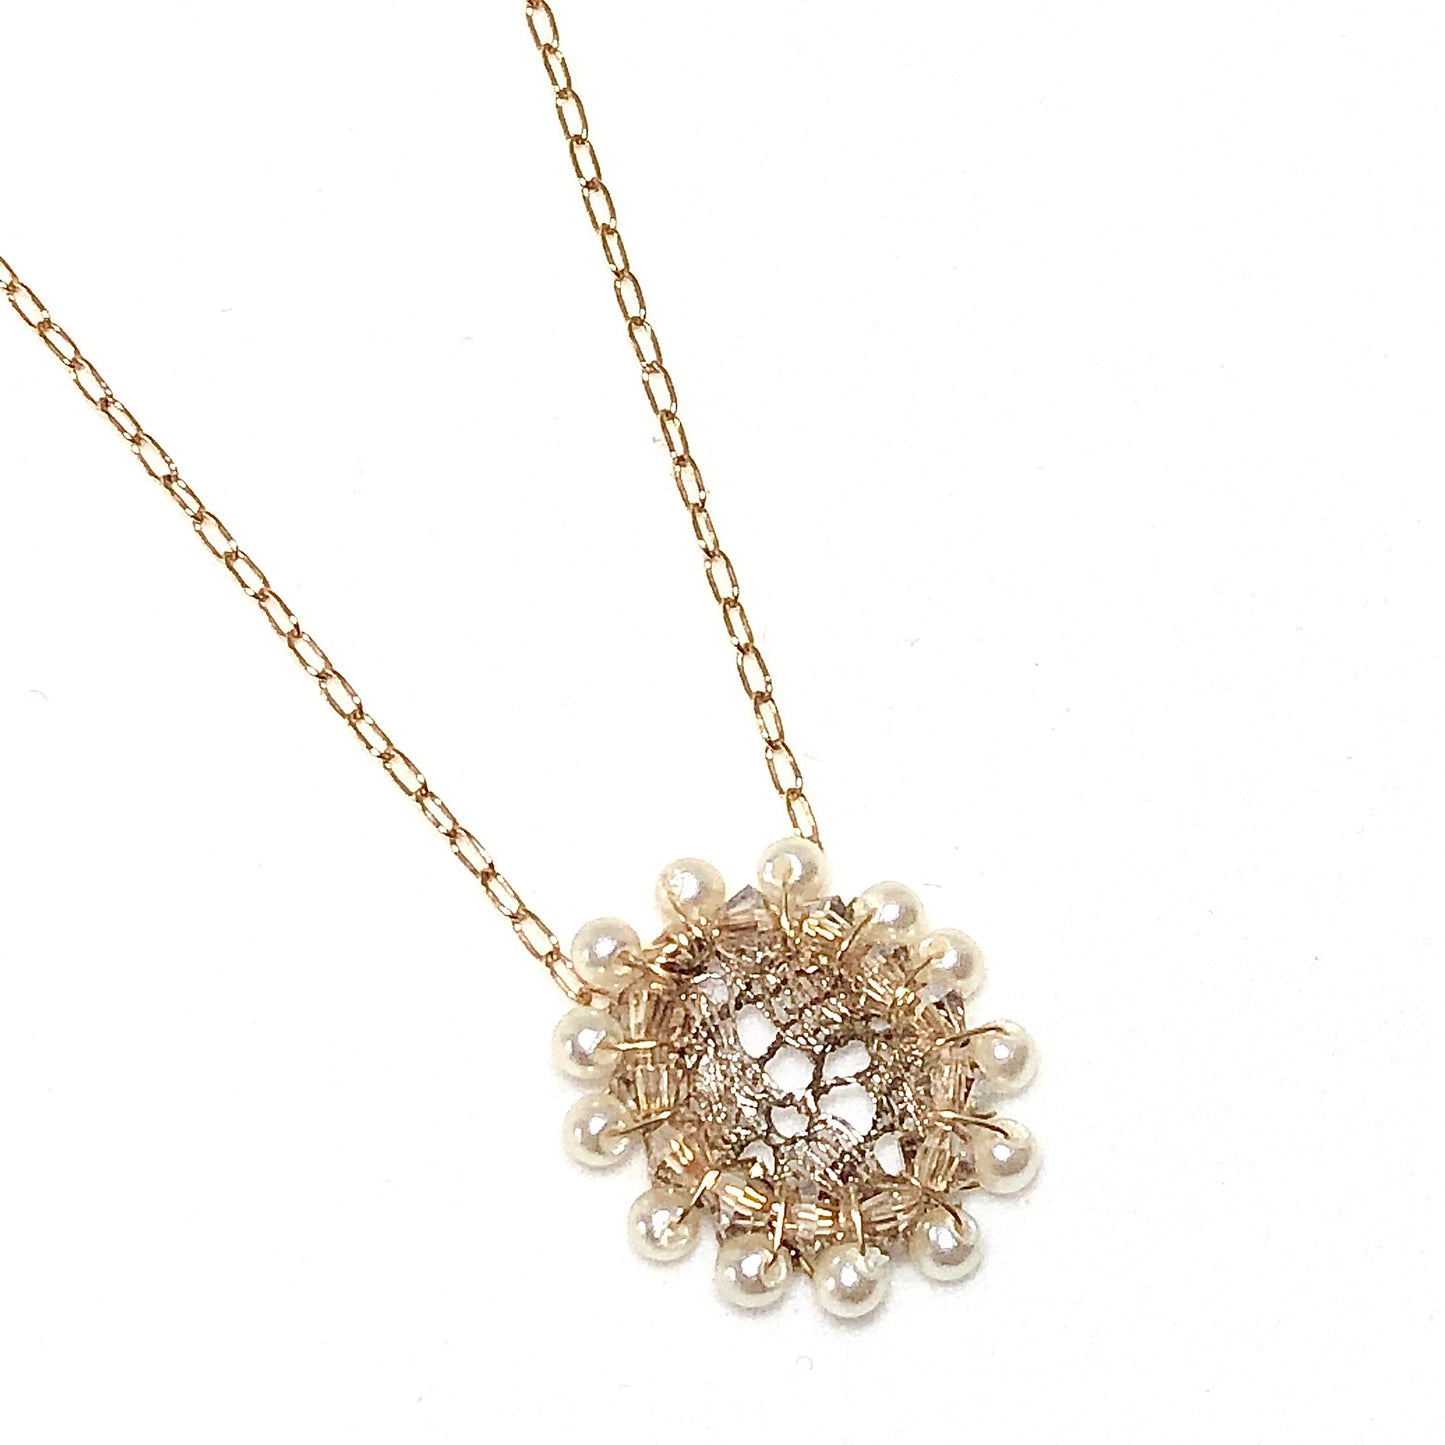 Antique French Metal Lace + Pearl Petite Pendant Necklace